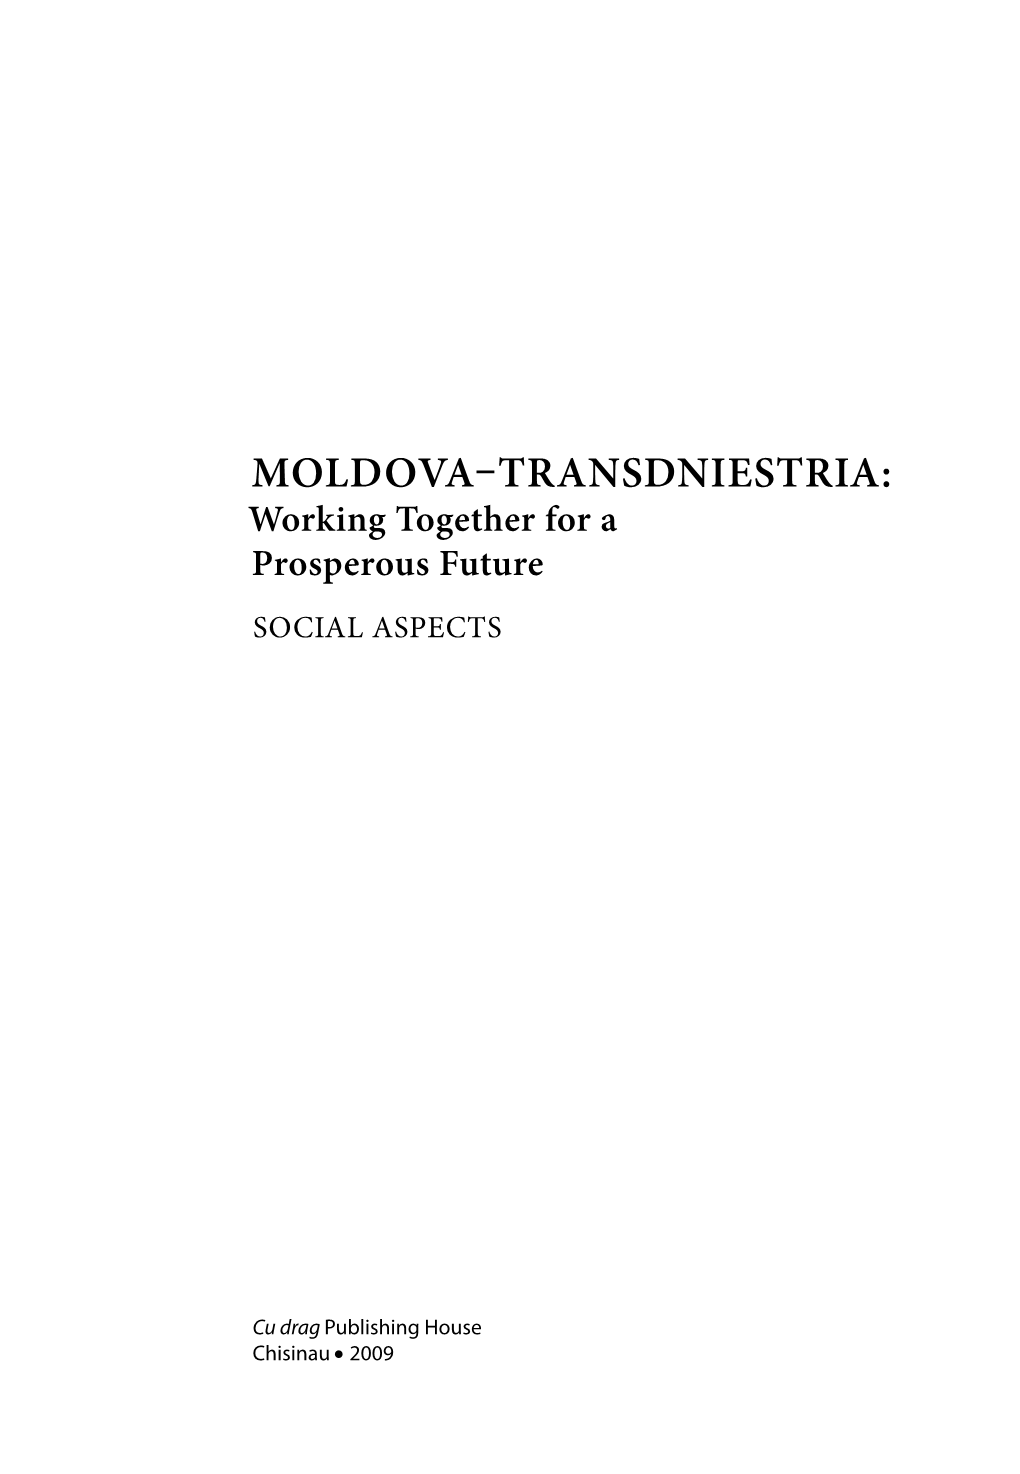 Moldova–Transdniestria: Social Aspects